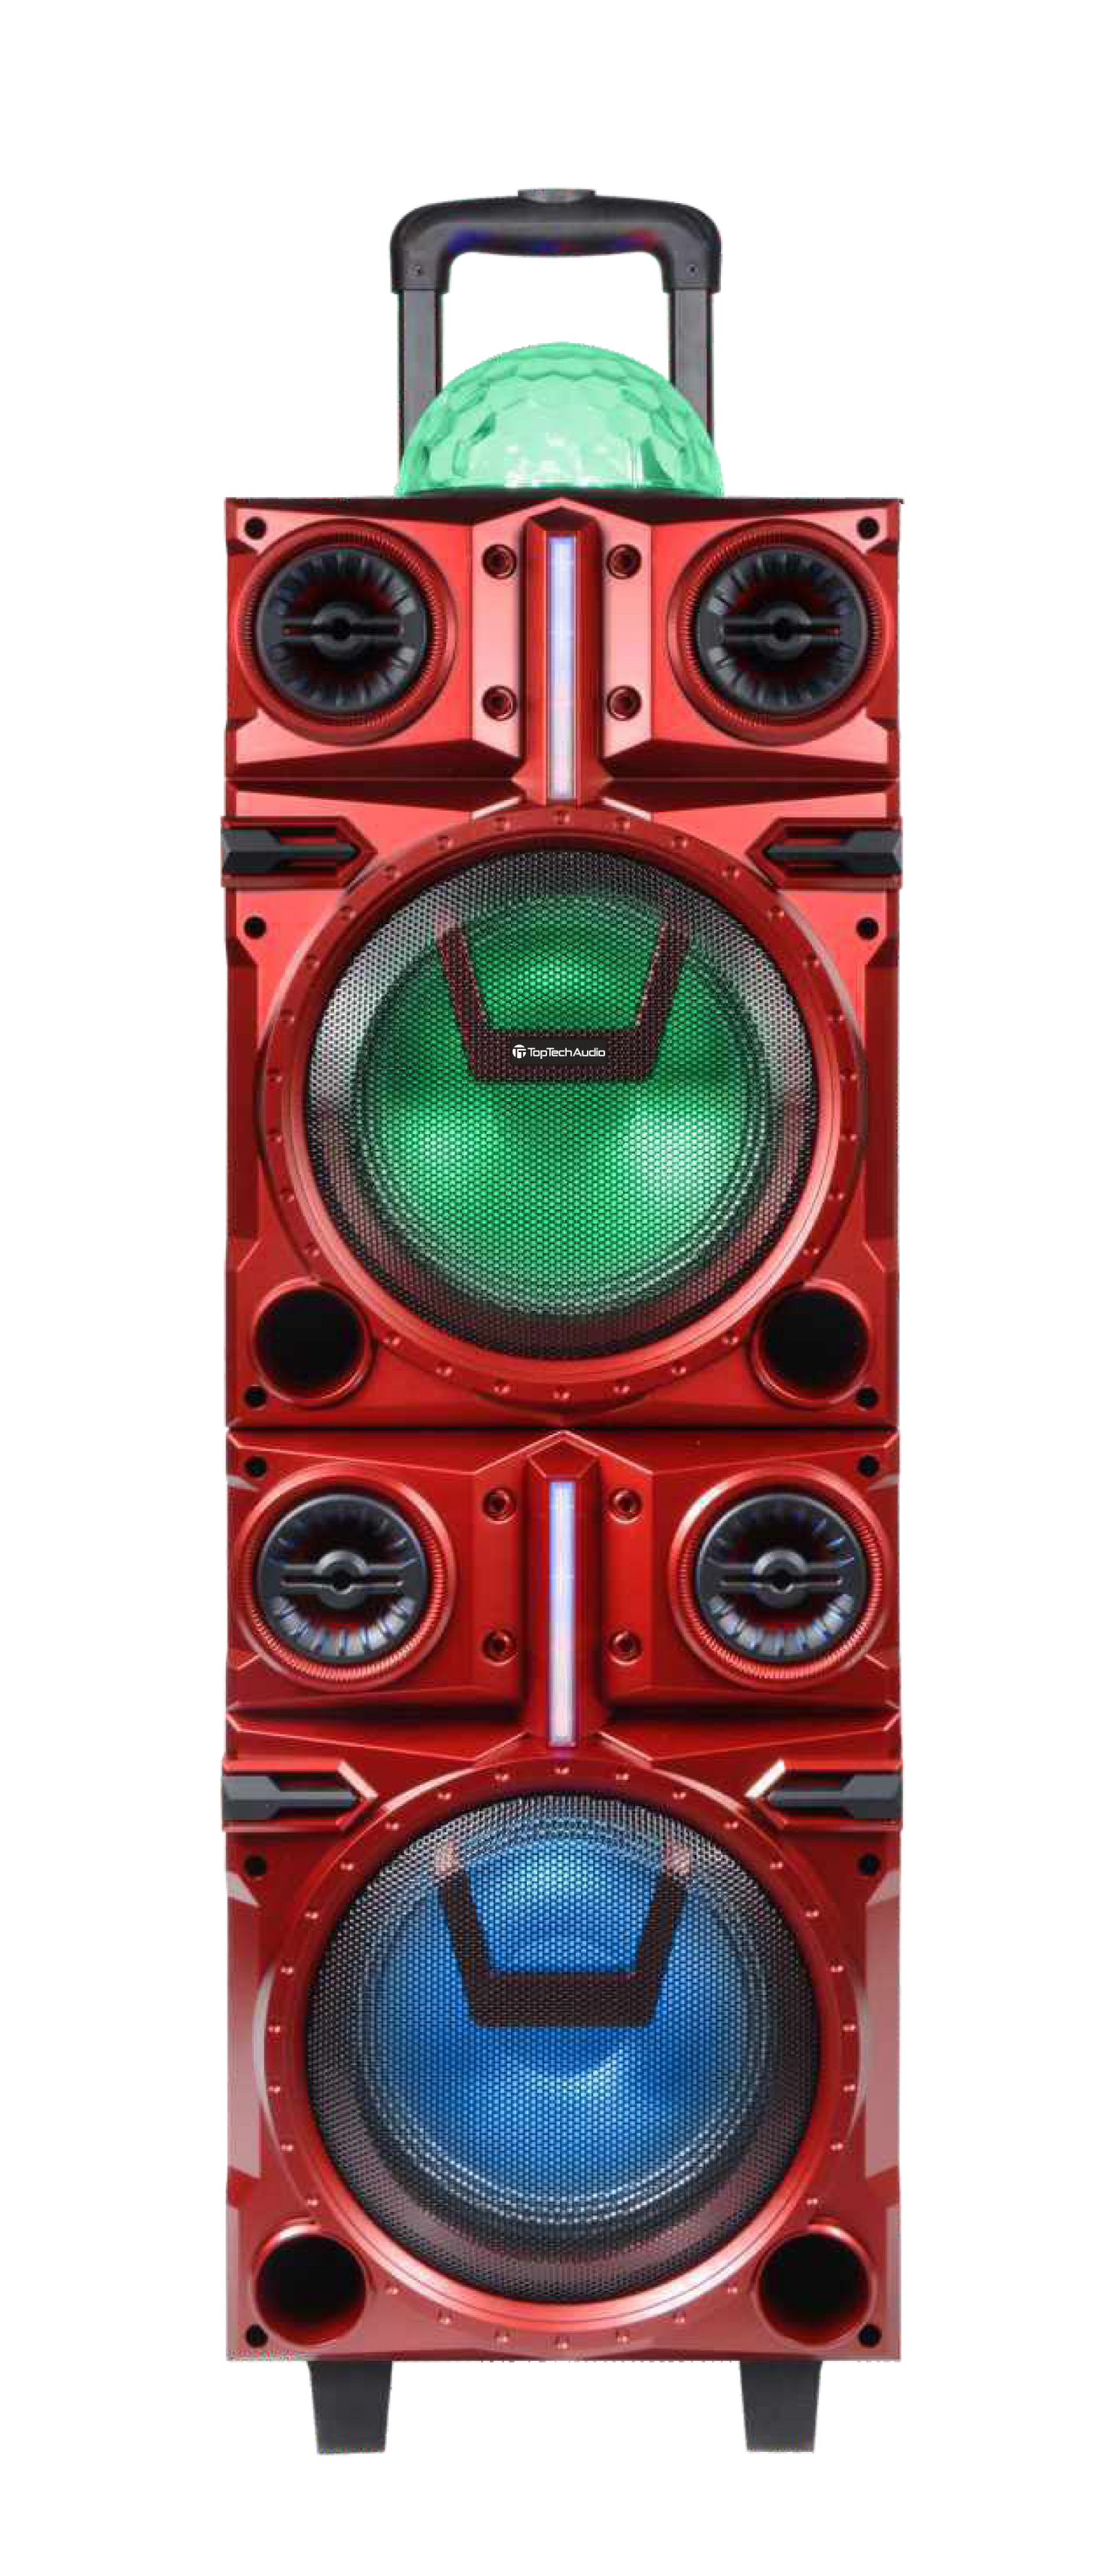 Spark-208 Fully Amplified Portable 5000 Watts Peak Power 2x8” Speaker